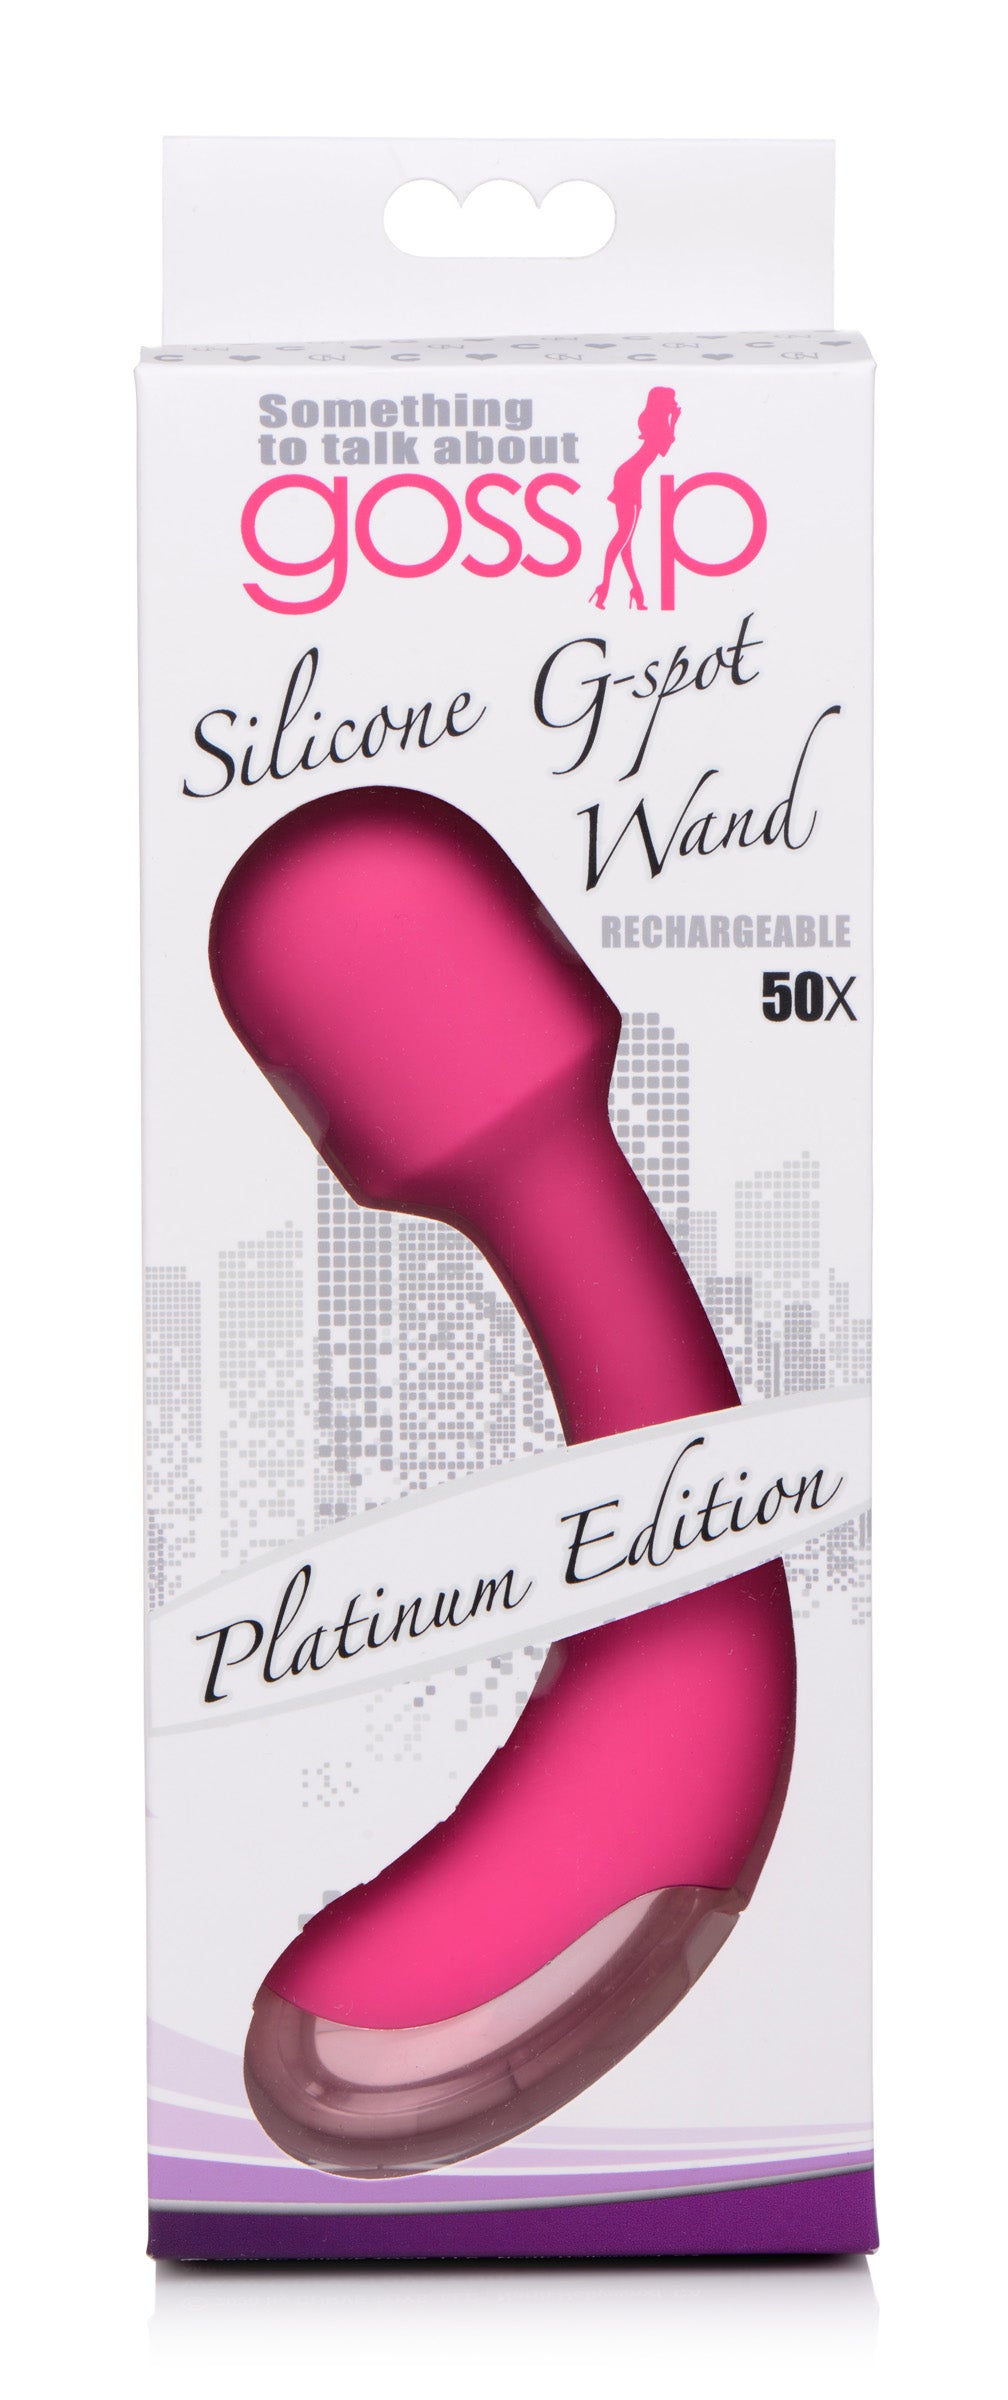 50X Silicone G-spot Wand - Pink - UABDSM